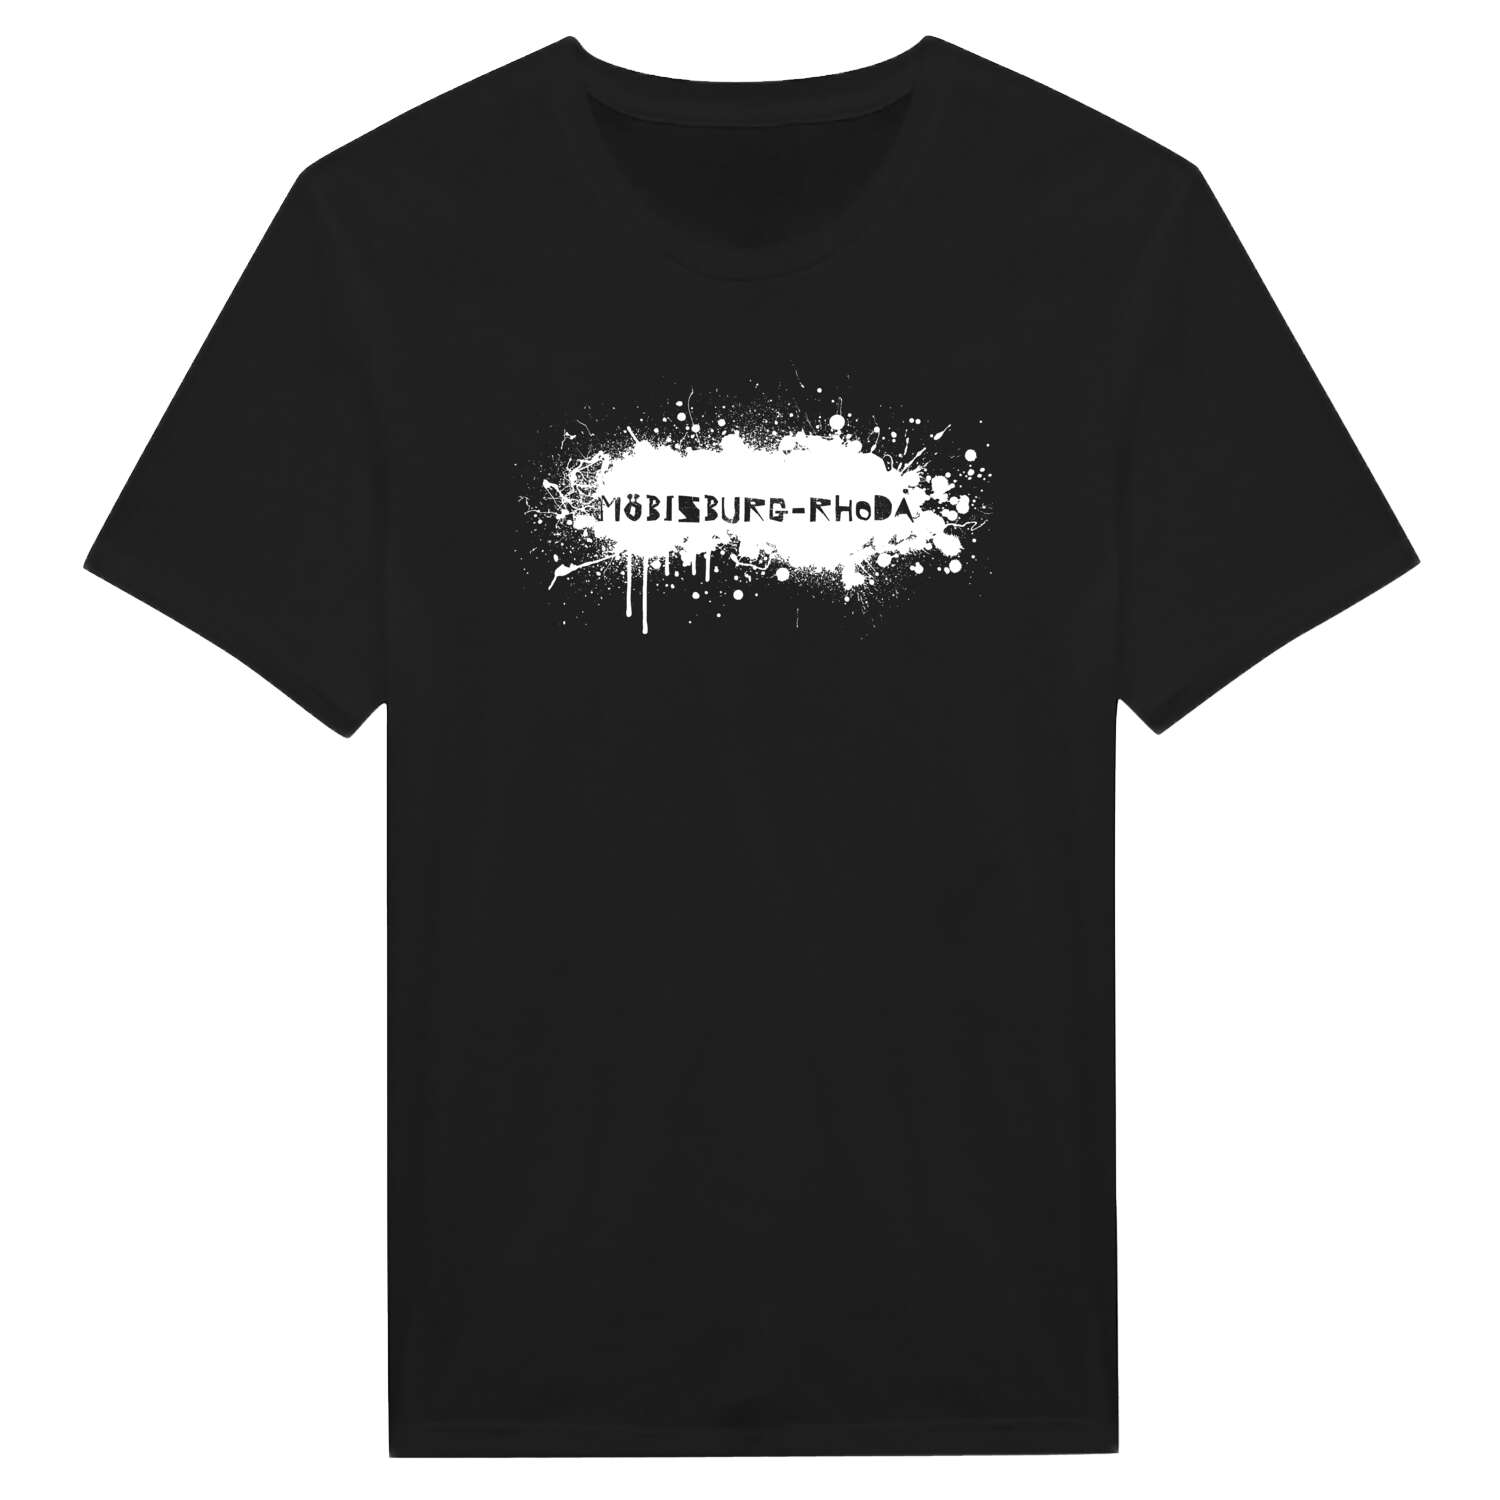 Möbisburg-Rhoda T-Shirt »Paint Splash Punk«